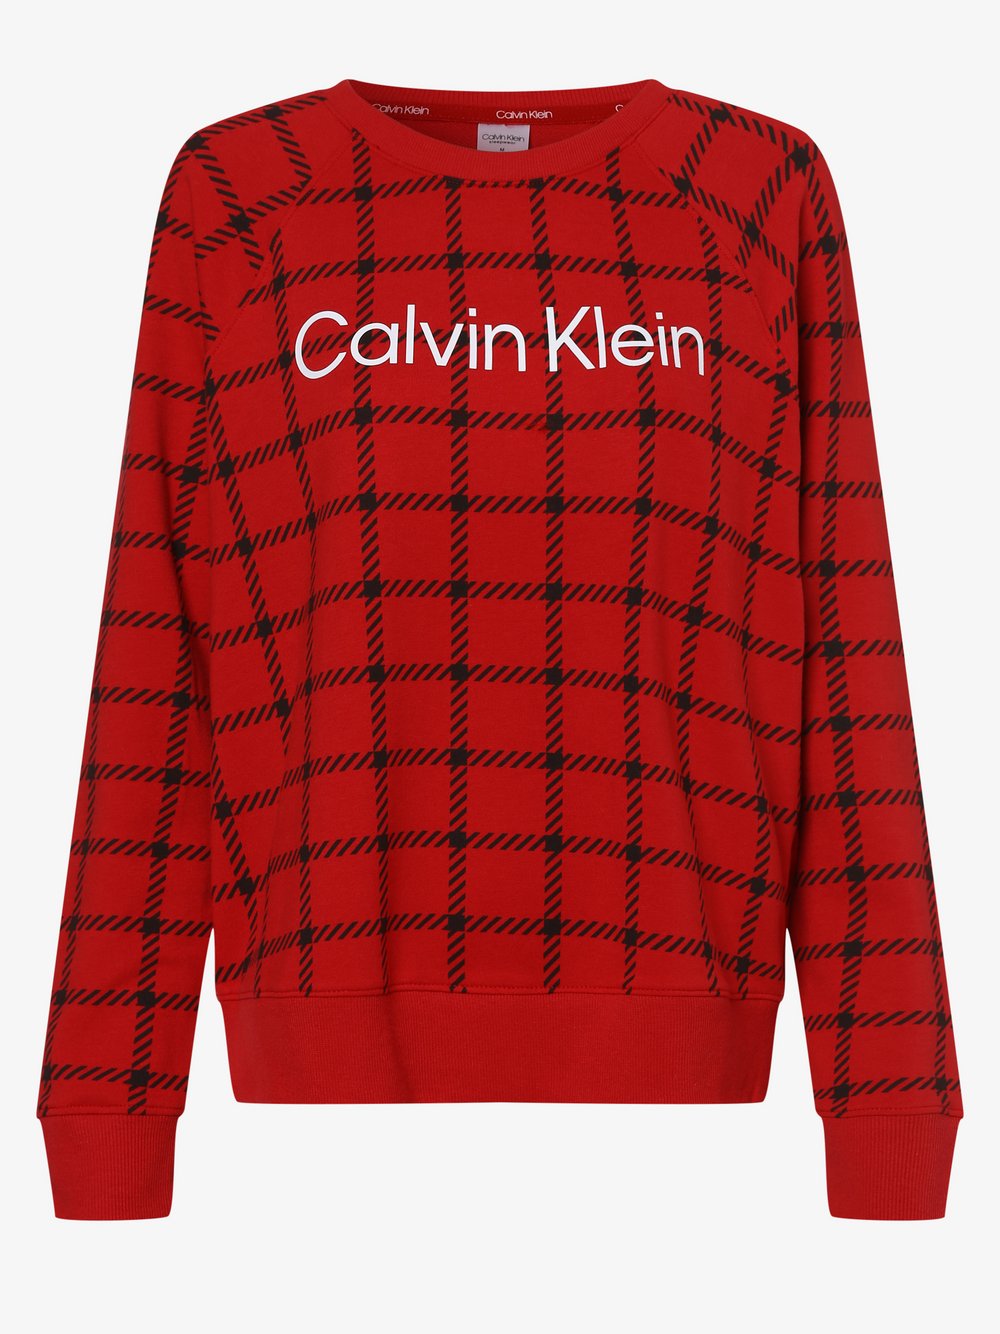 Calvin Klein - Damska koszulka od piżamy, czerwony